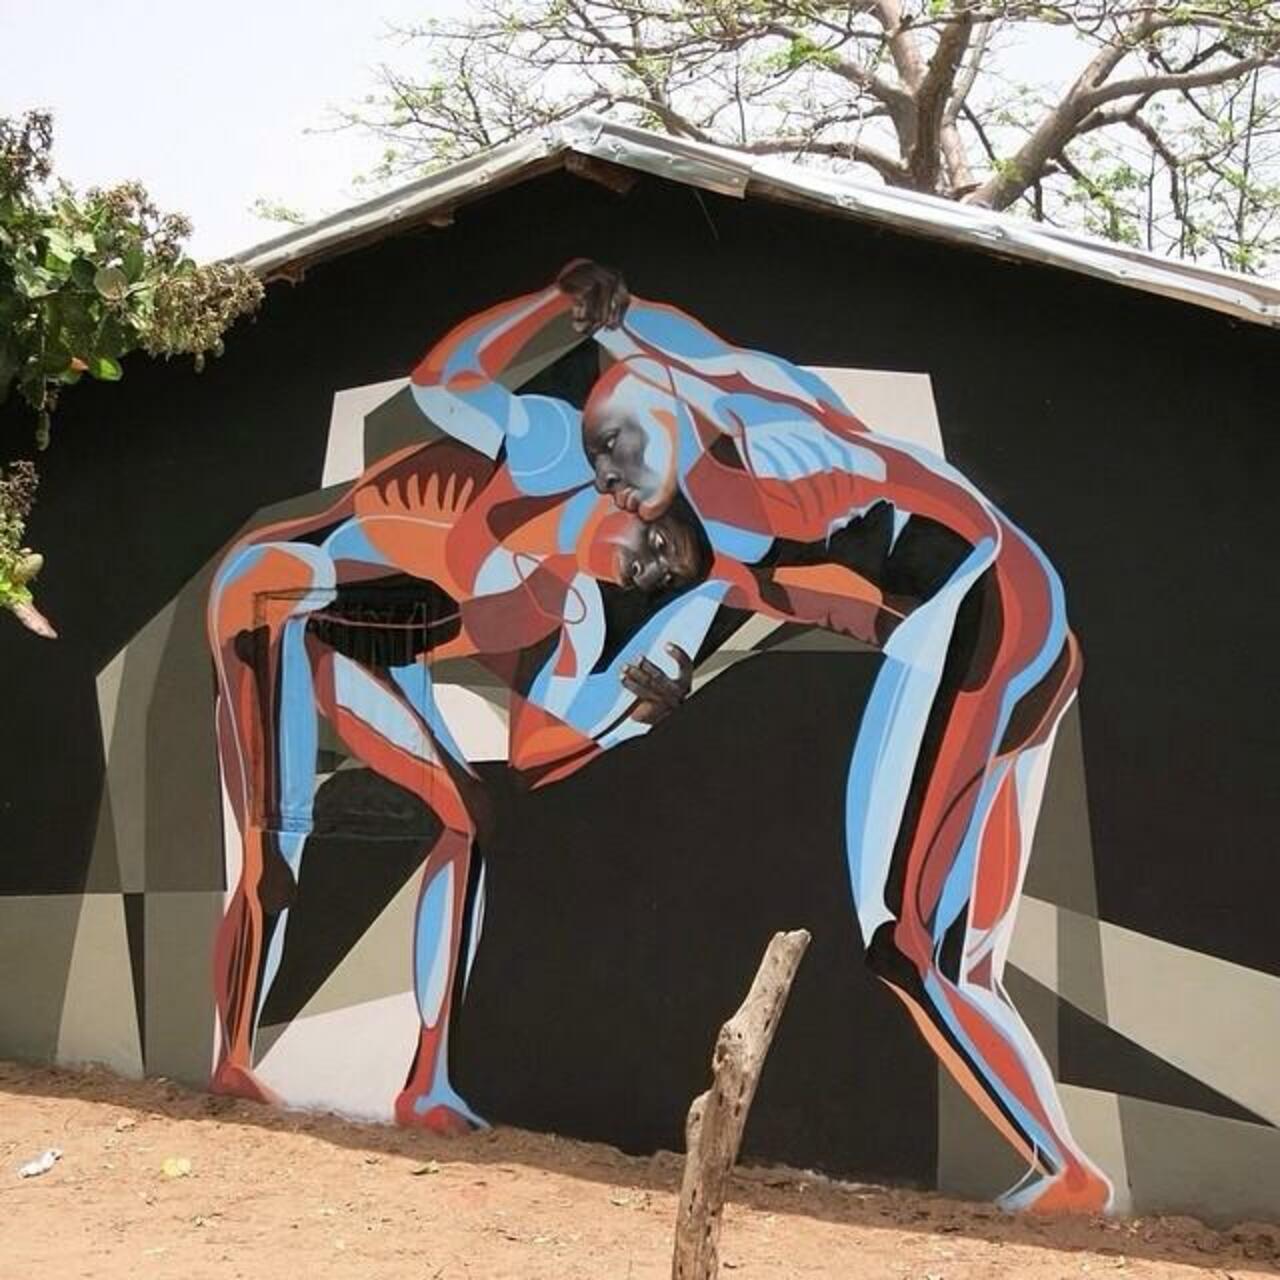 RT @designopinion: Artist 'Best Ever' new Street Art for the wide open walls in Galoya, The Gambia #art #graffiti #mural #streetart http://t.co/s8wPJVr1rD